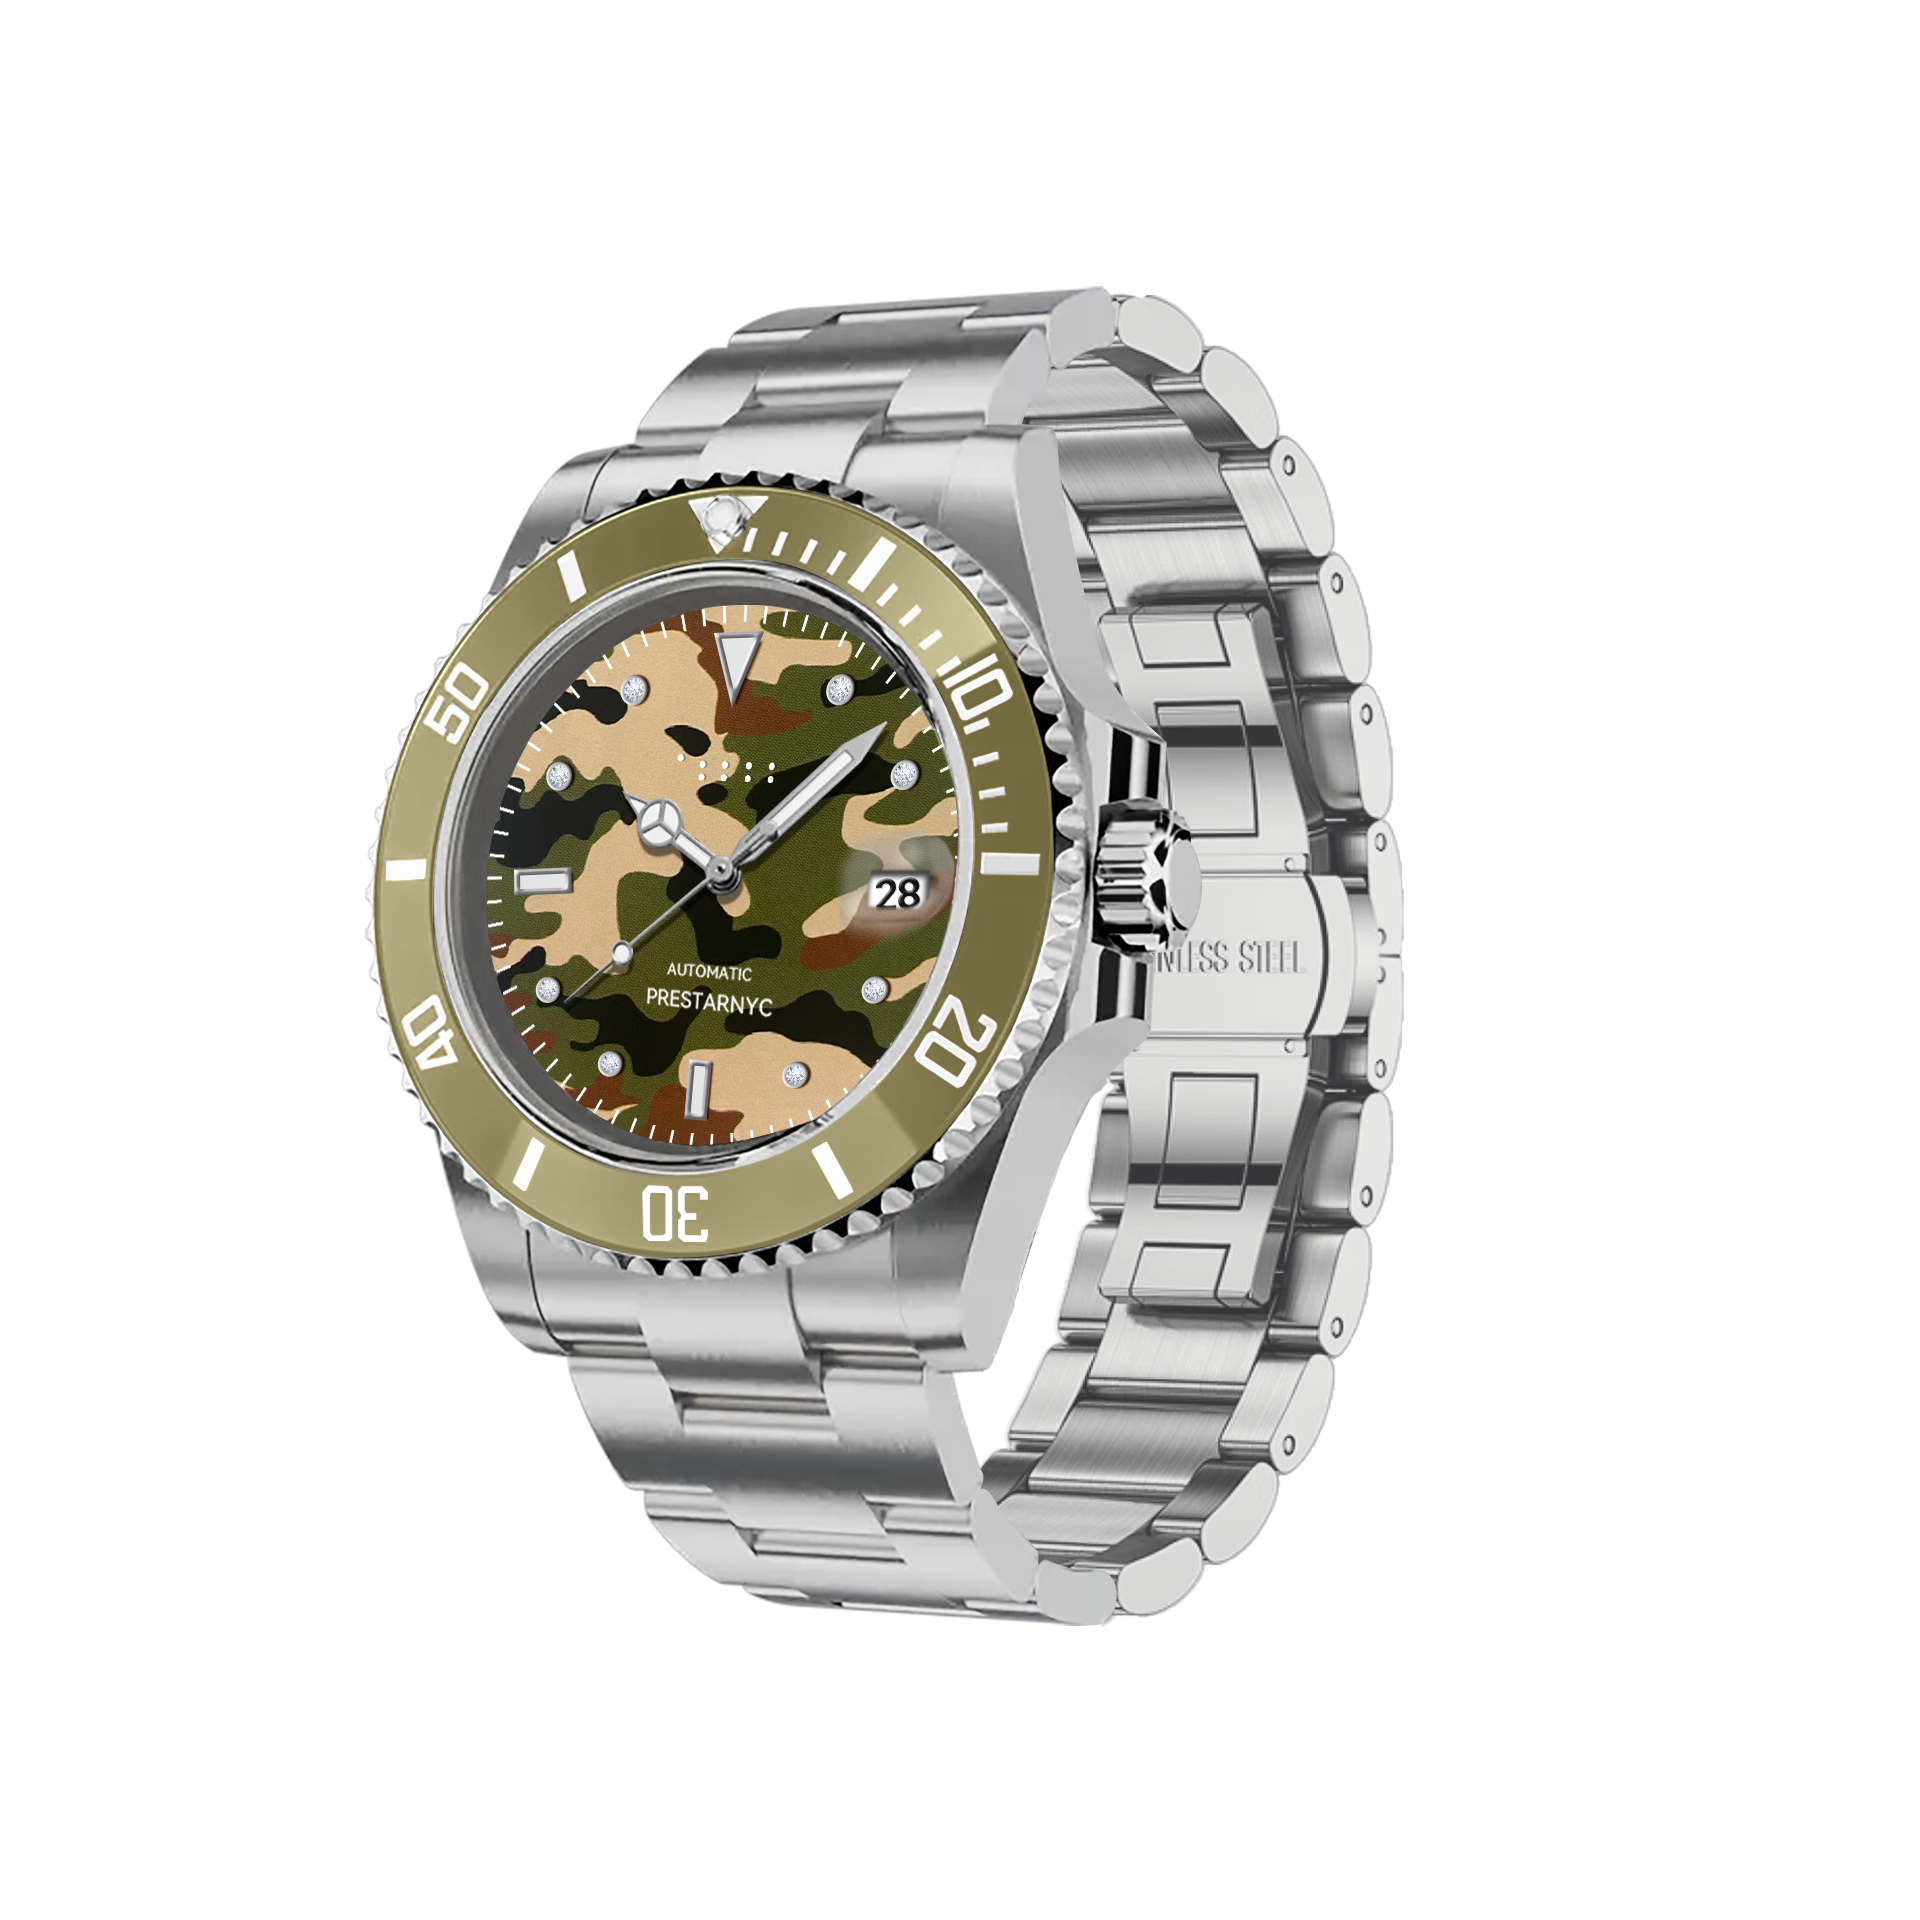 Prestar NYC Aquaman Chequered Gemstone Watch (Hunter Hunter)